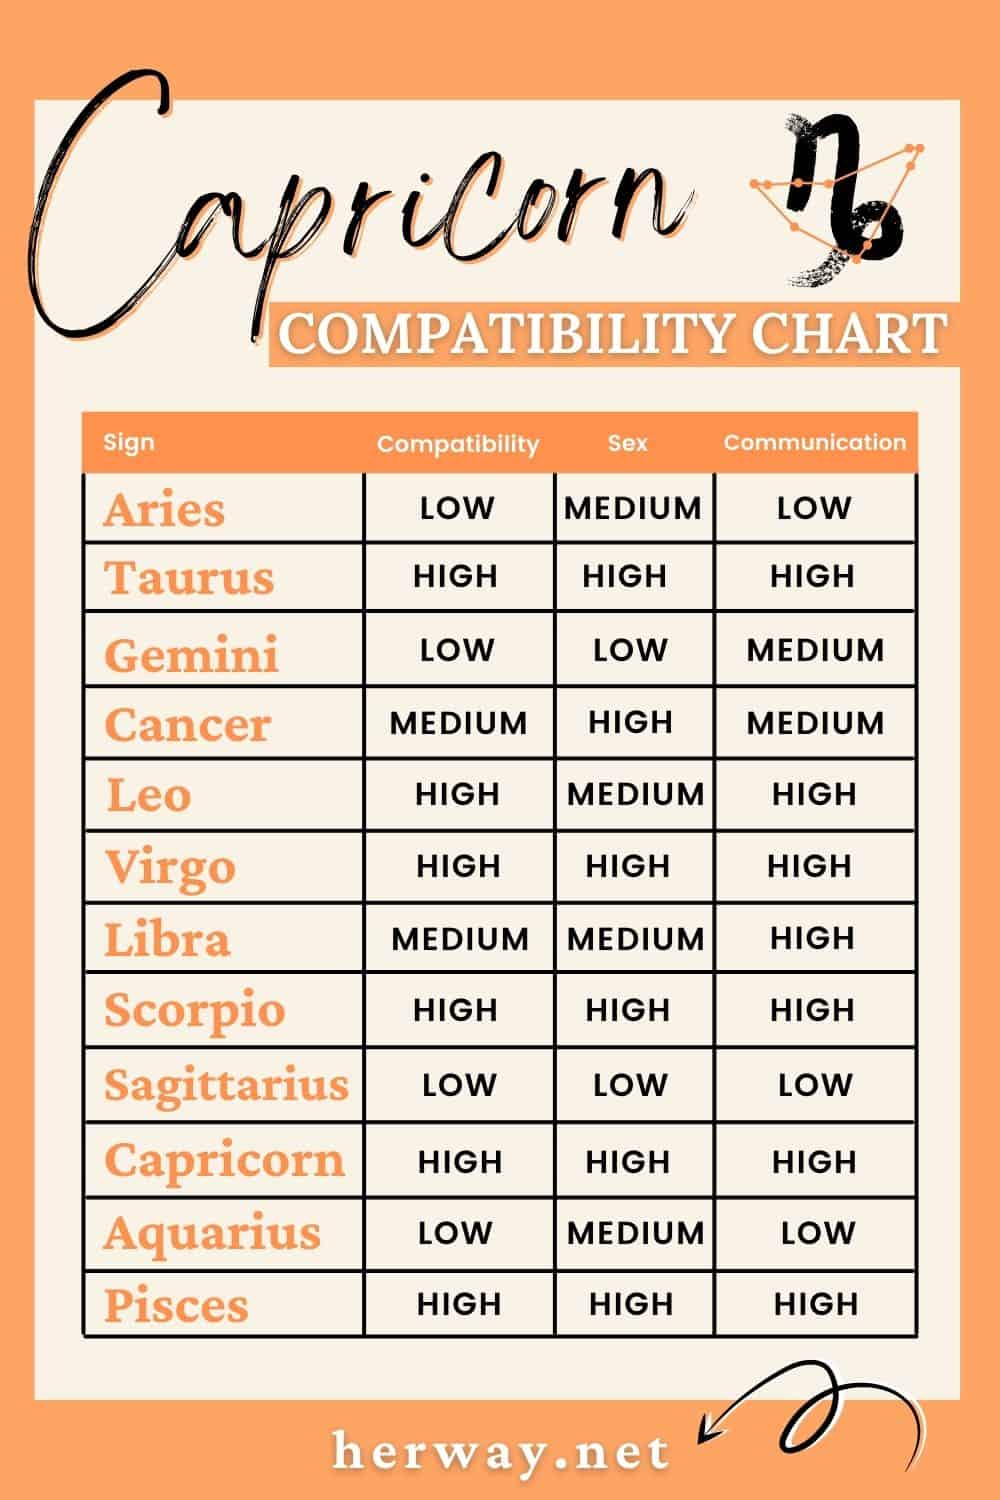 capricorn compatibility chart